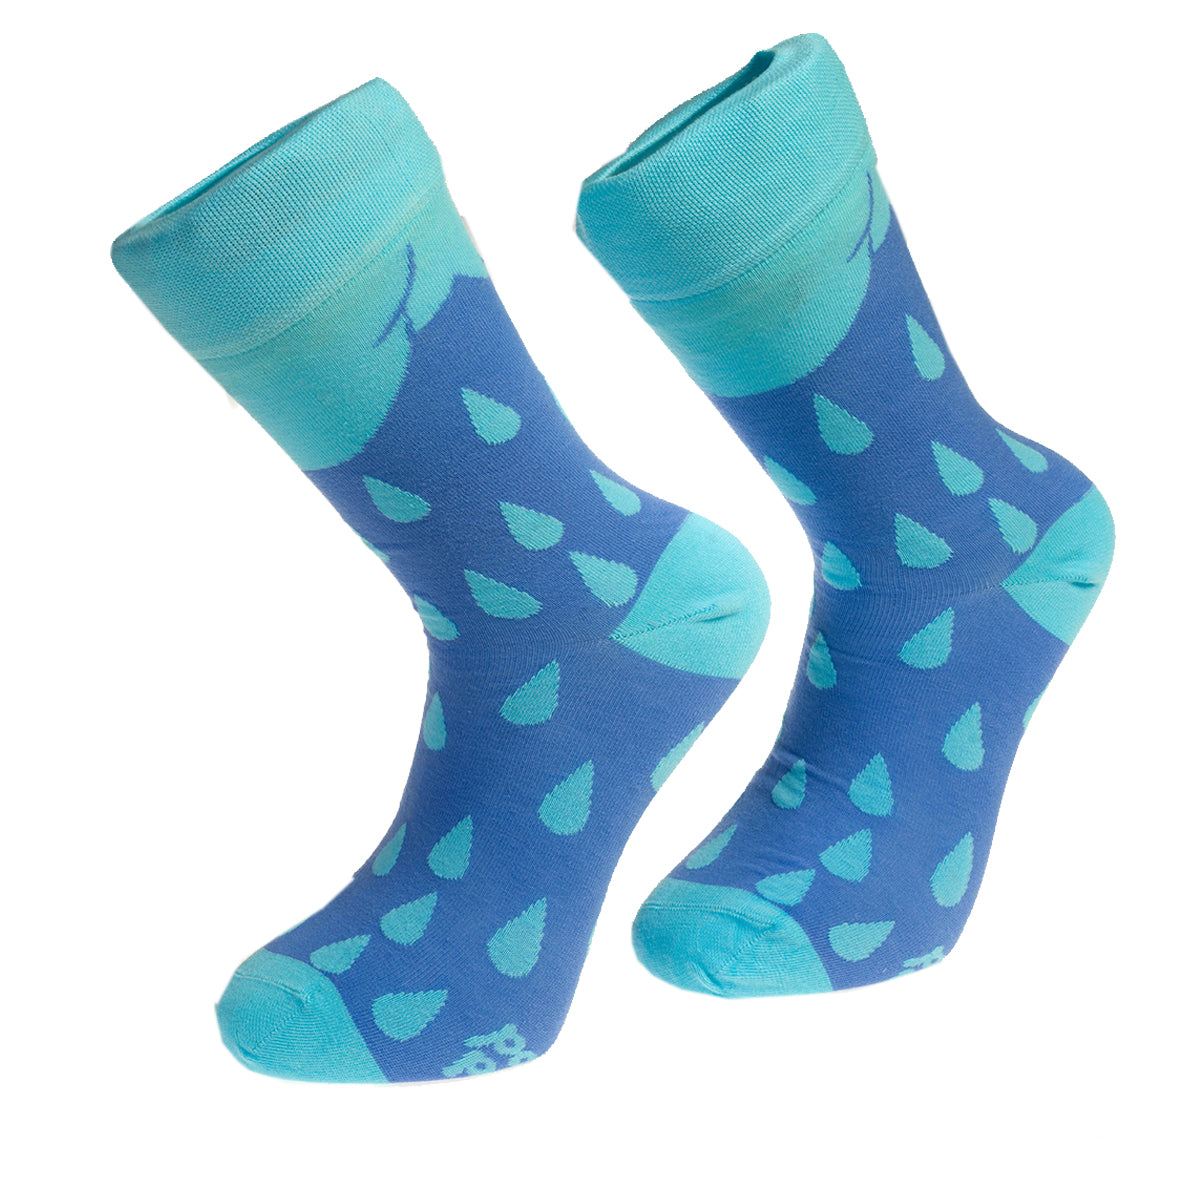 Blue Water Drop -European Made - Egyptian Cotton Socks - Premium Cotton Fun socks with Soft Elastic